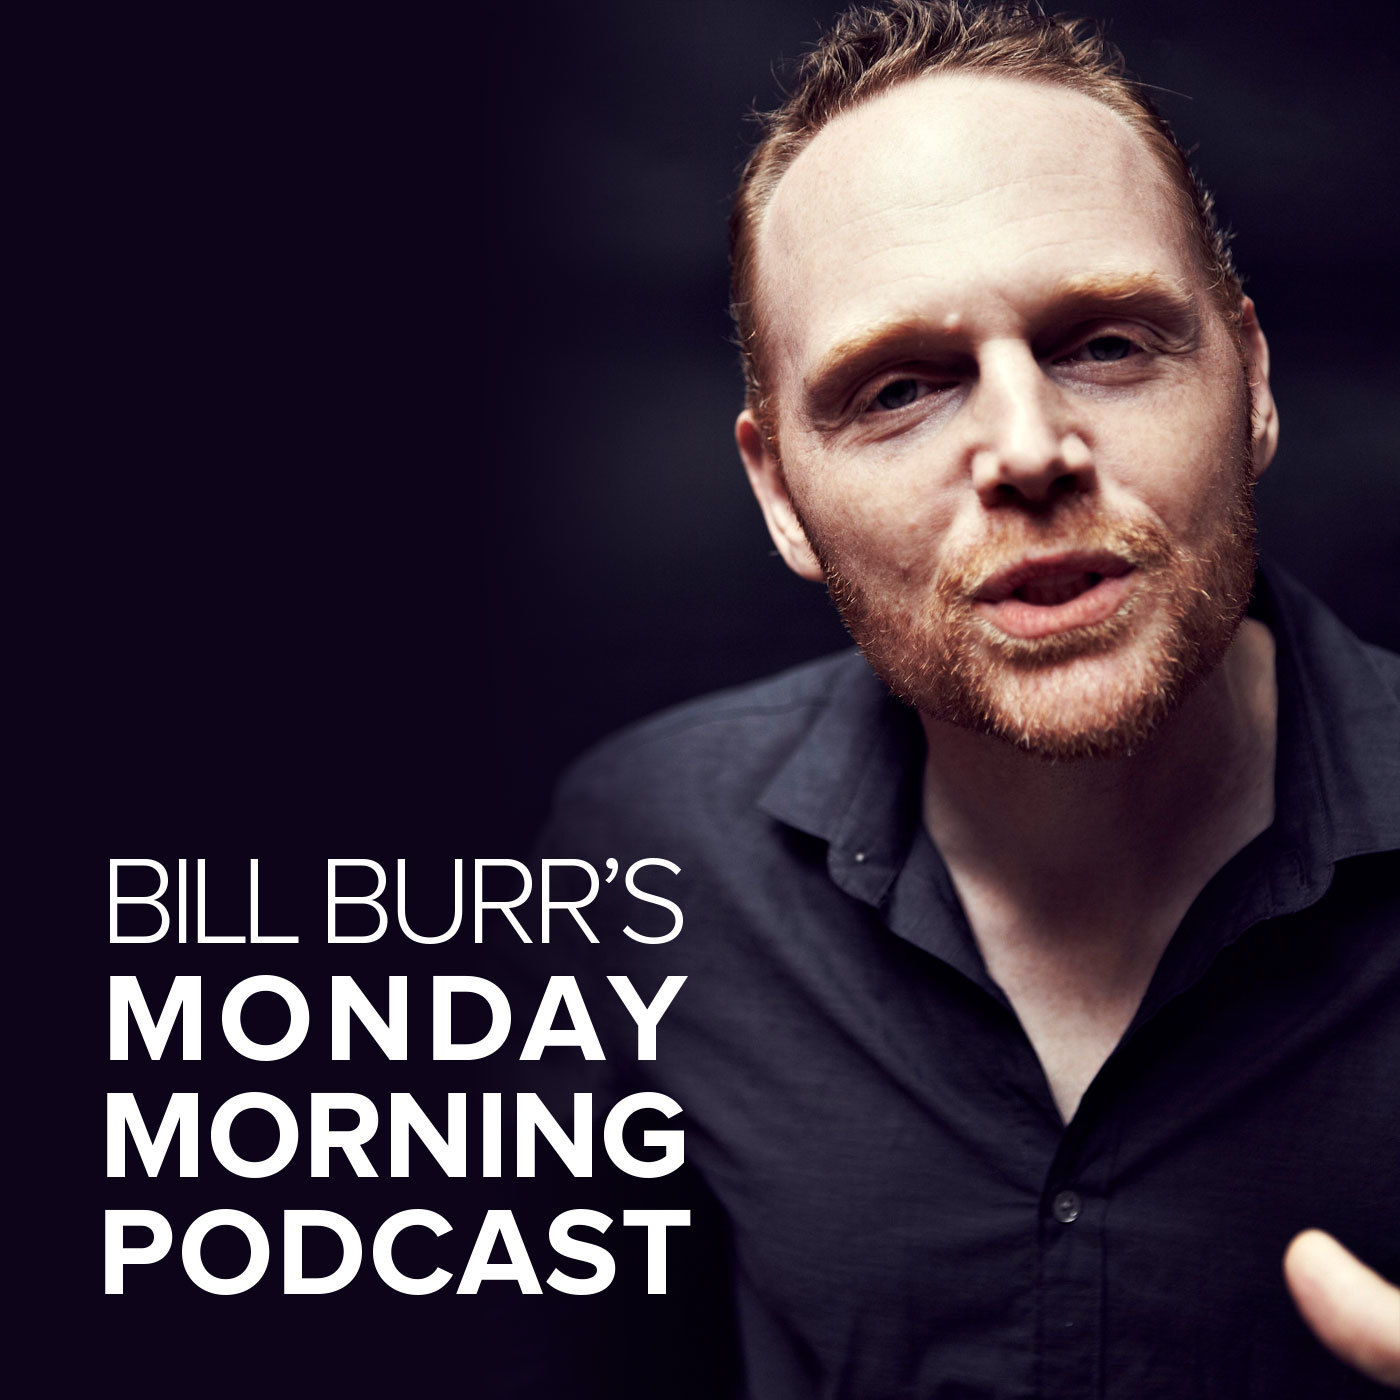 Monday Morning Podcast 12-21-15